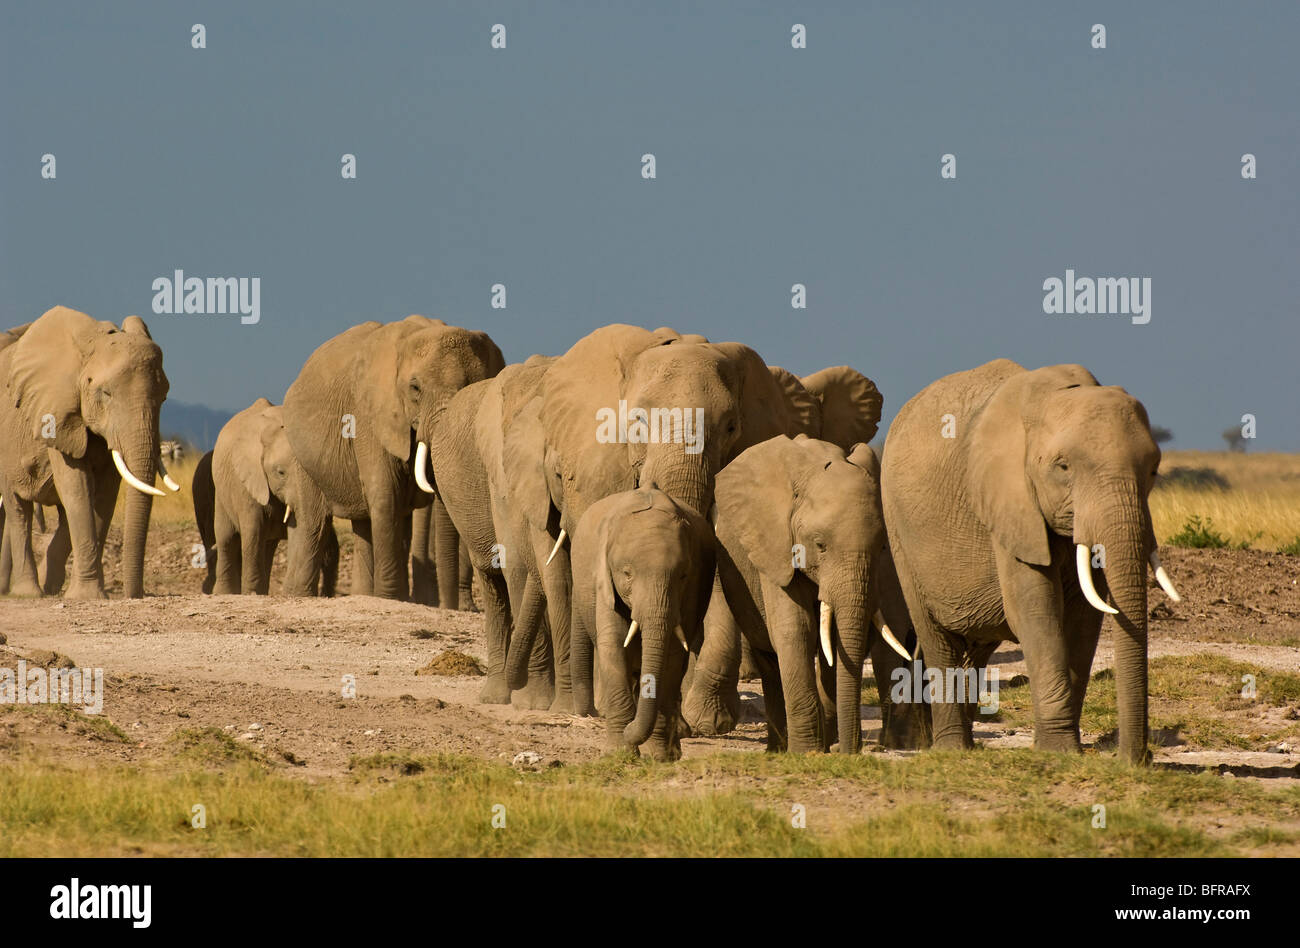 Elefantenherde zu Fuß in Richtung Kamera Stockfoto